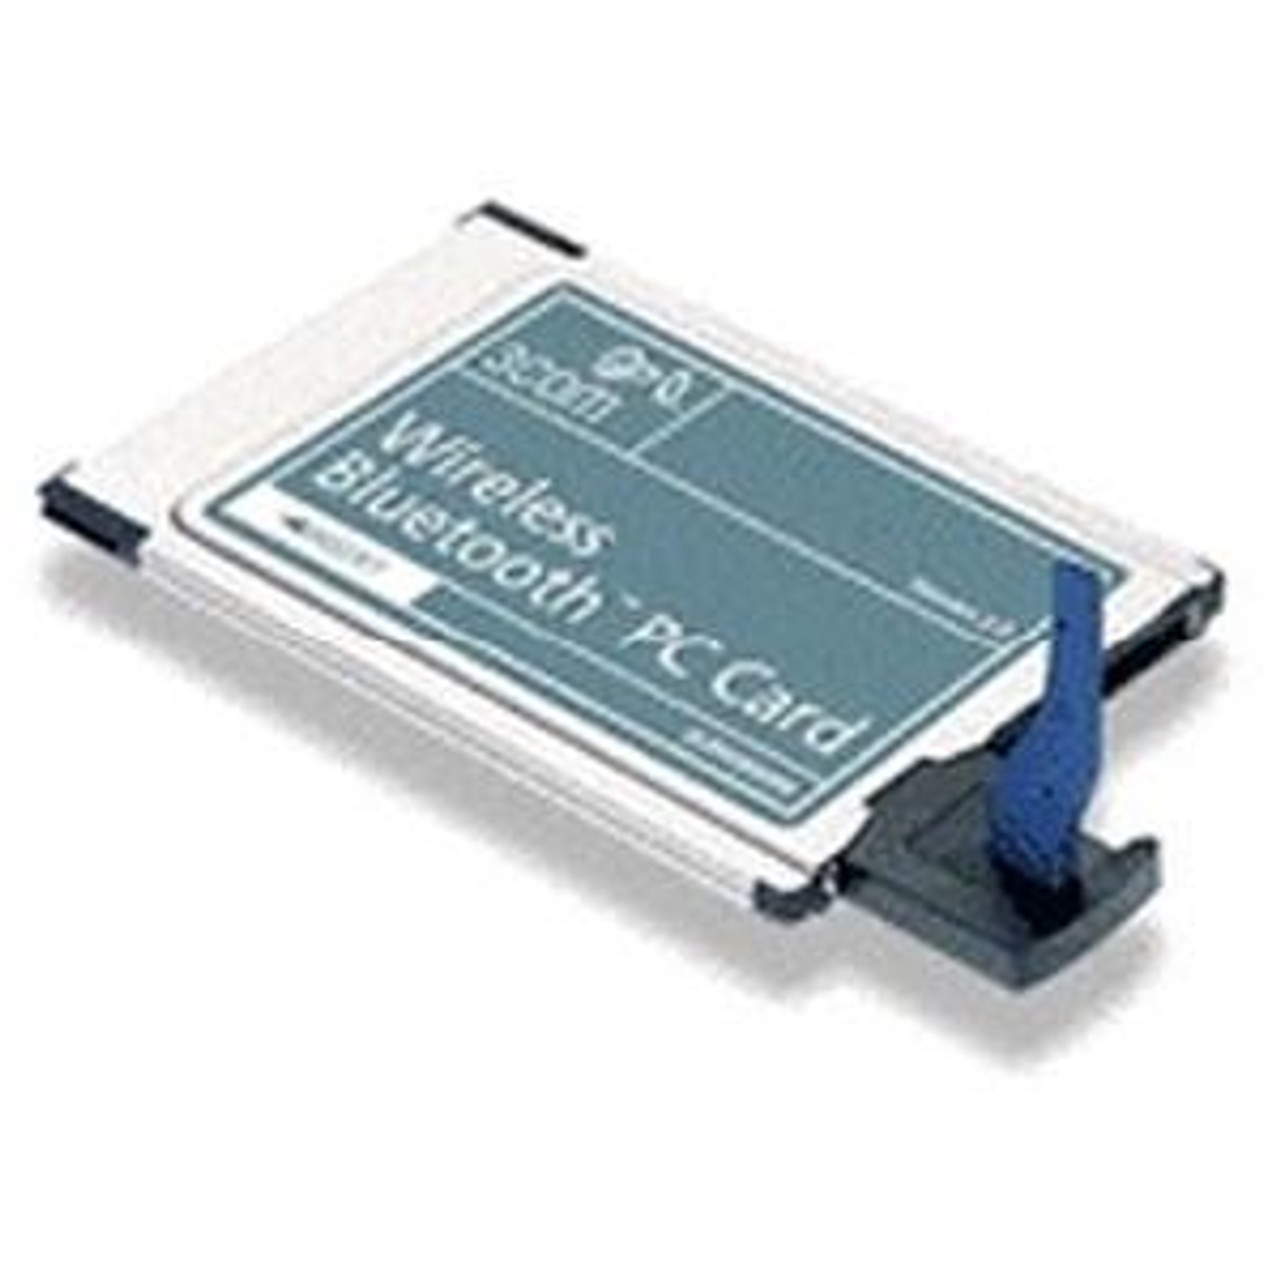 3CRWB6096 3Com Wireless Adapter PC Card Type II 1Mbps